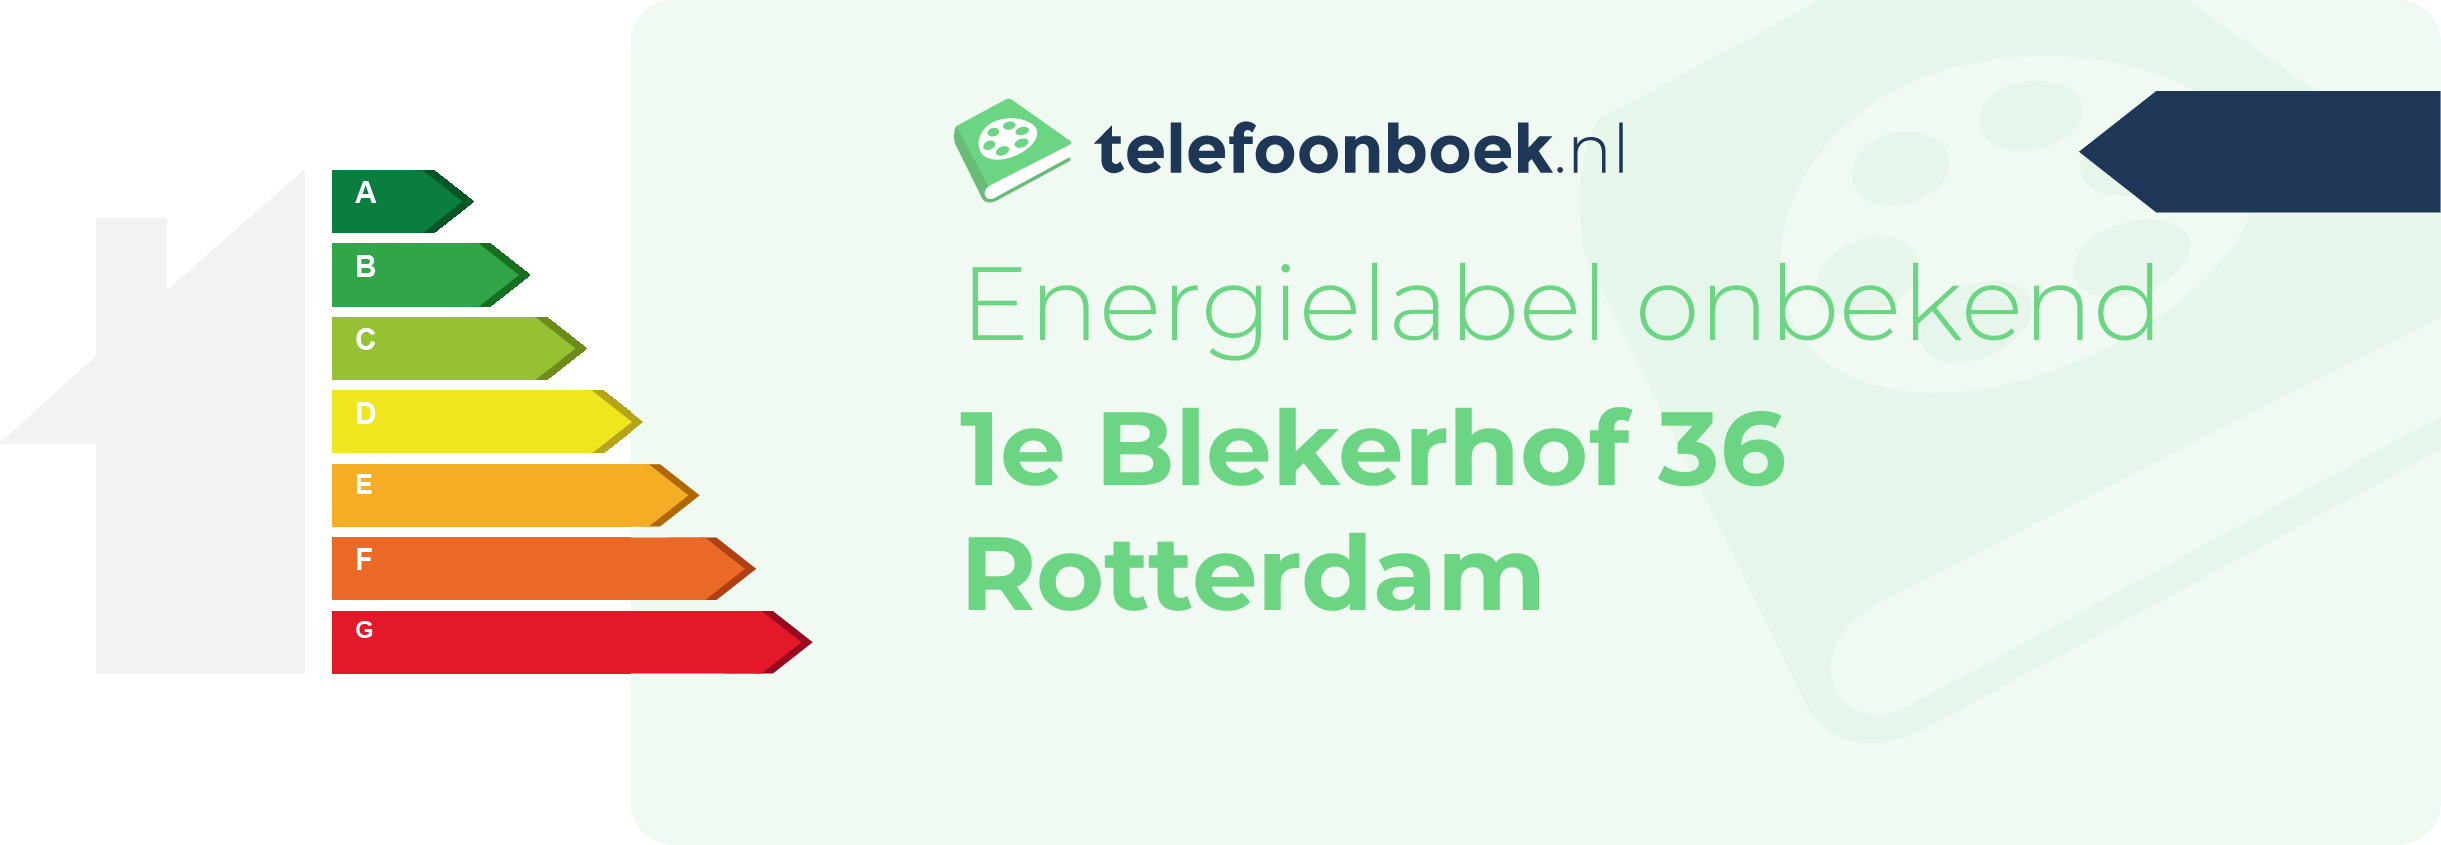 Energielabel 1e Blekerhof 36 Rotterdam